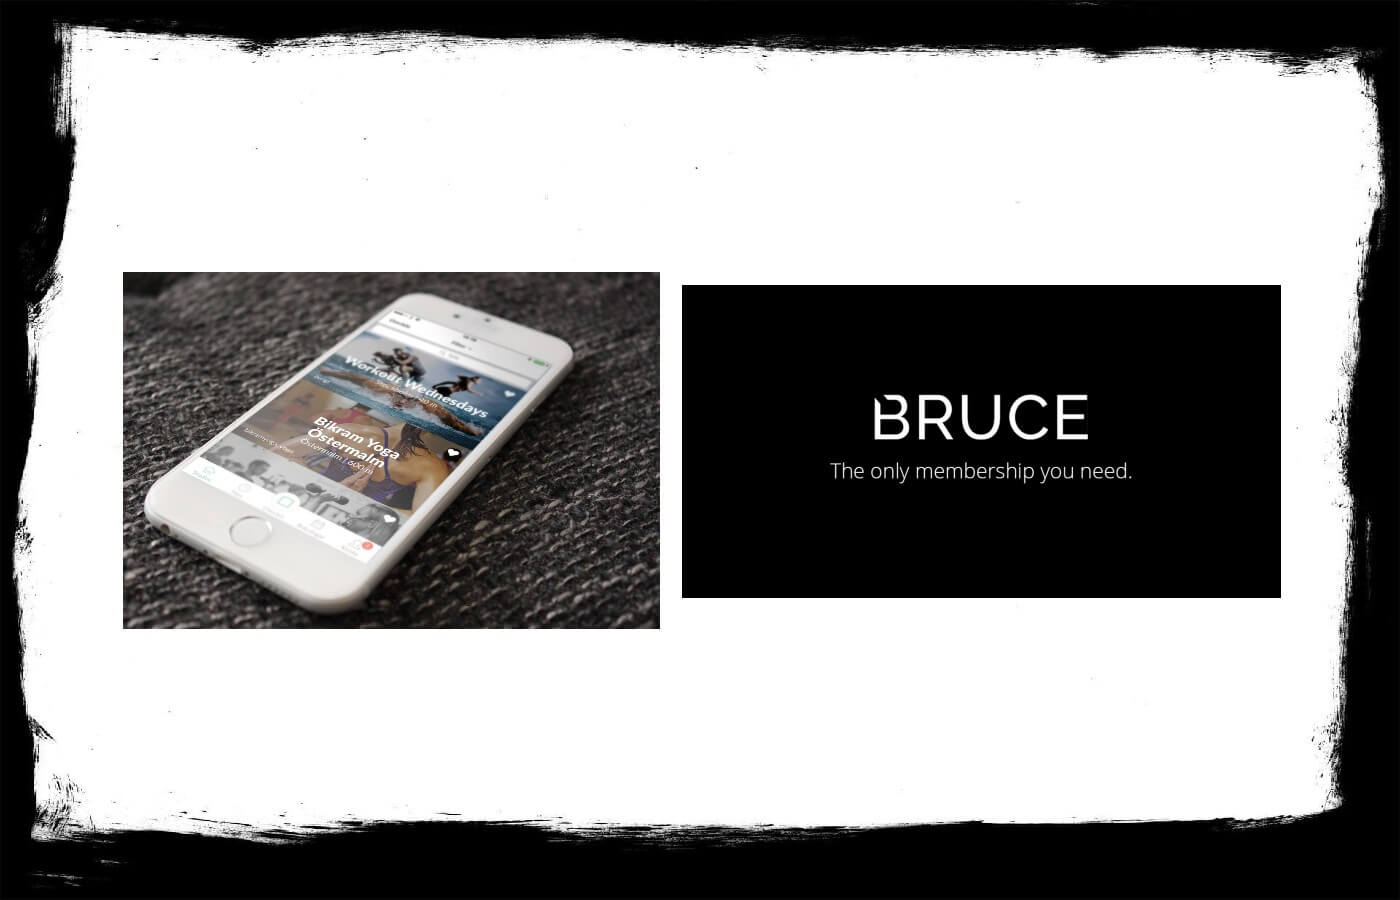 Bruce app